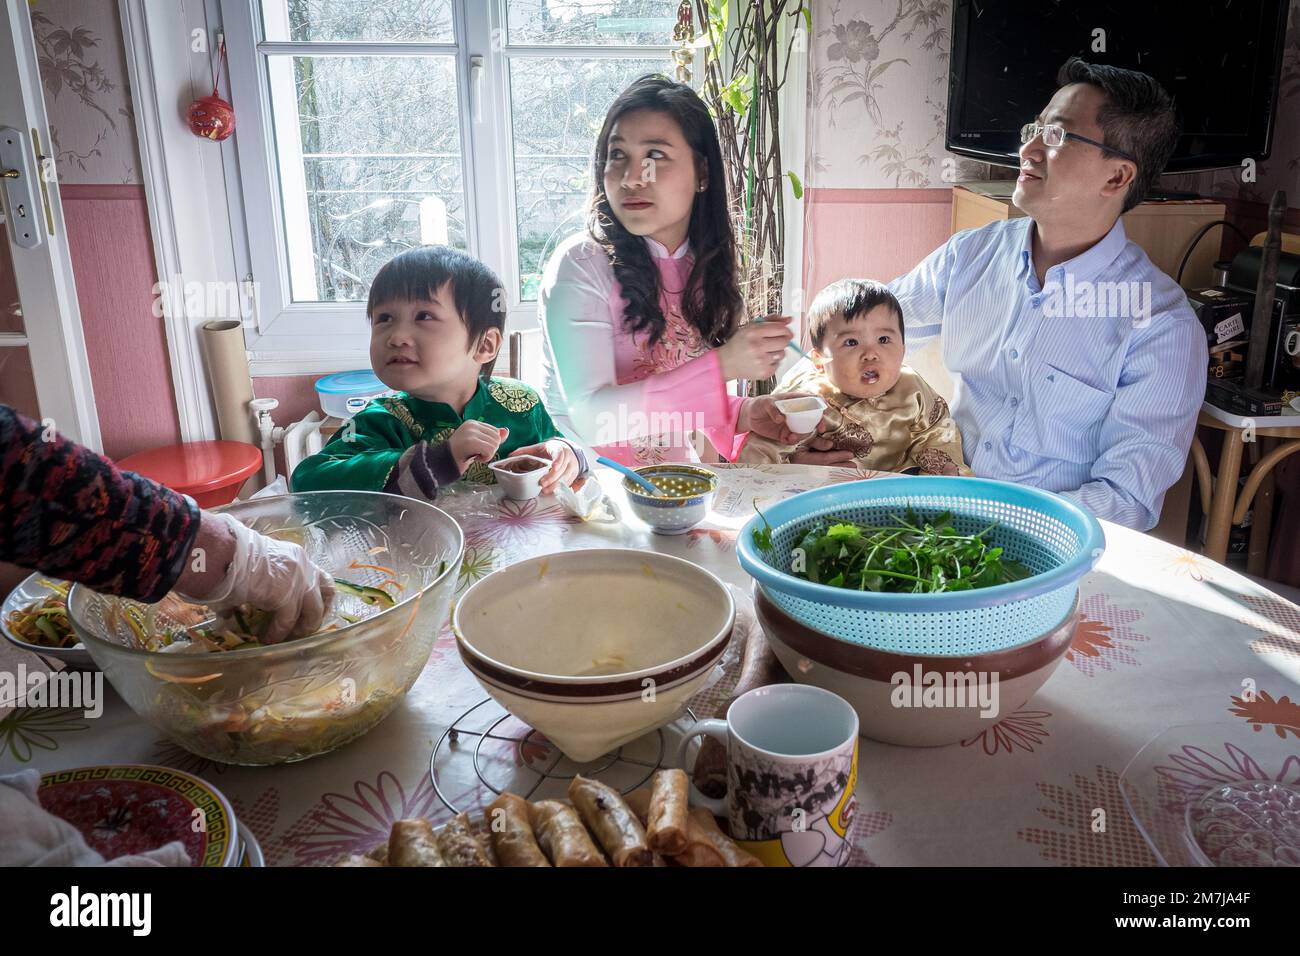 Olivier Donnars / Le Pictorium -  Tet, Vietnamese New Year -  7/2/2016  -  France / Ile-de-France (region)  -  At Mr. and Mrs. Ong's house, family mem Stock Photo